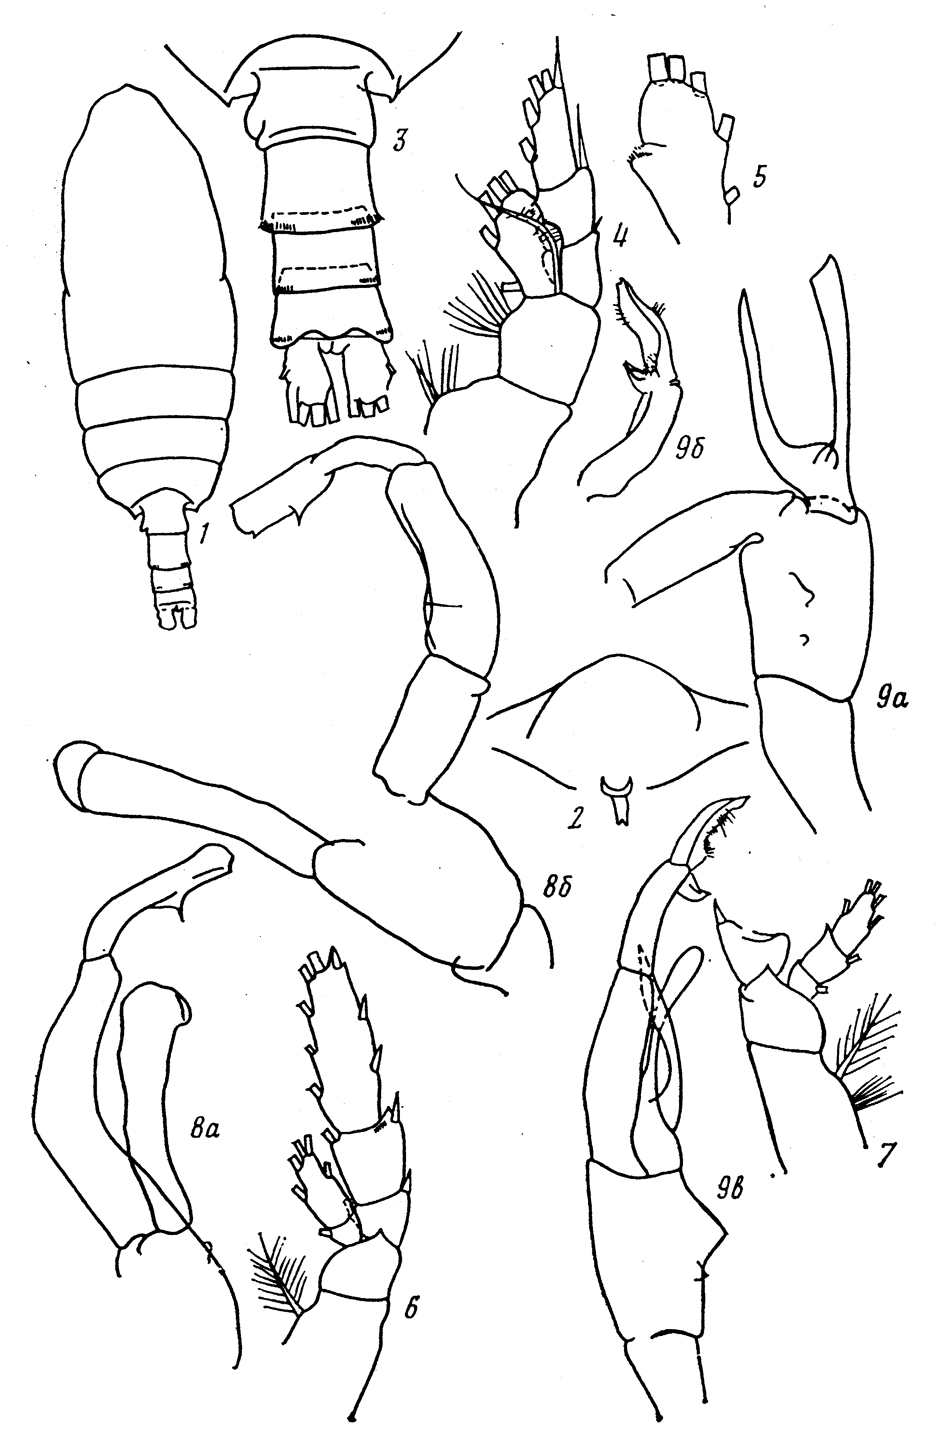 Species Batheuchaeta anomala - Plate 2 of morphological figures